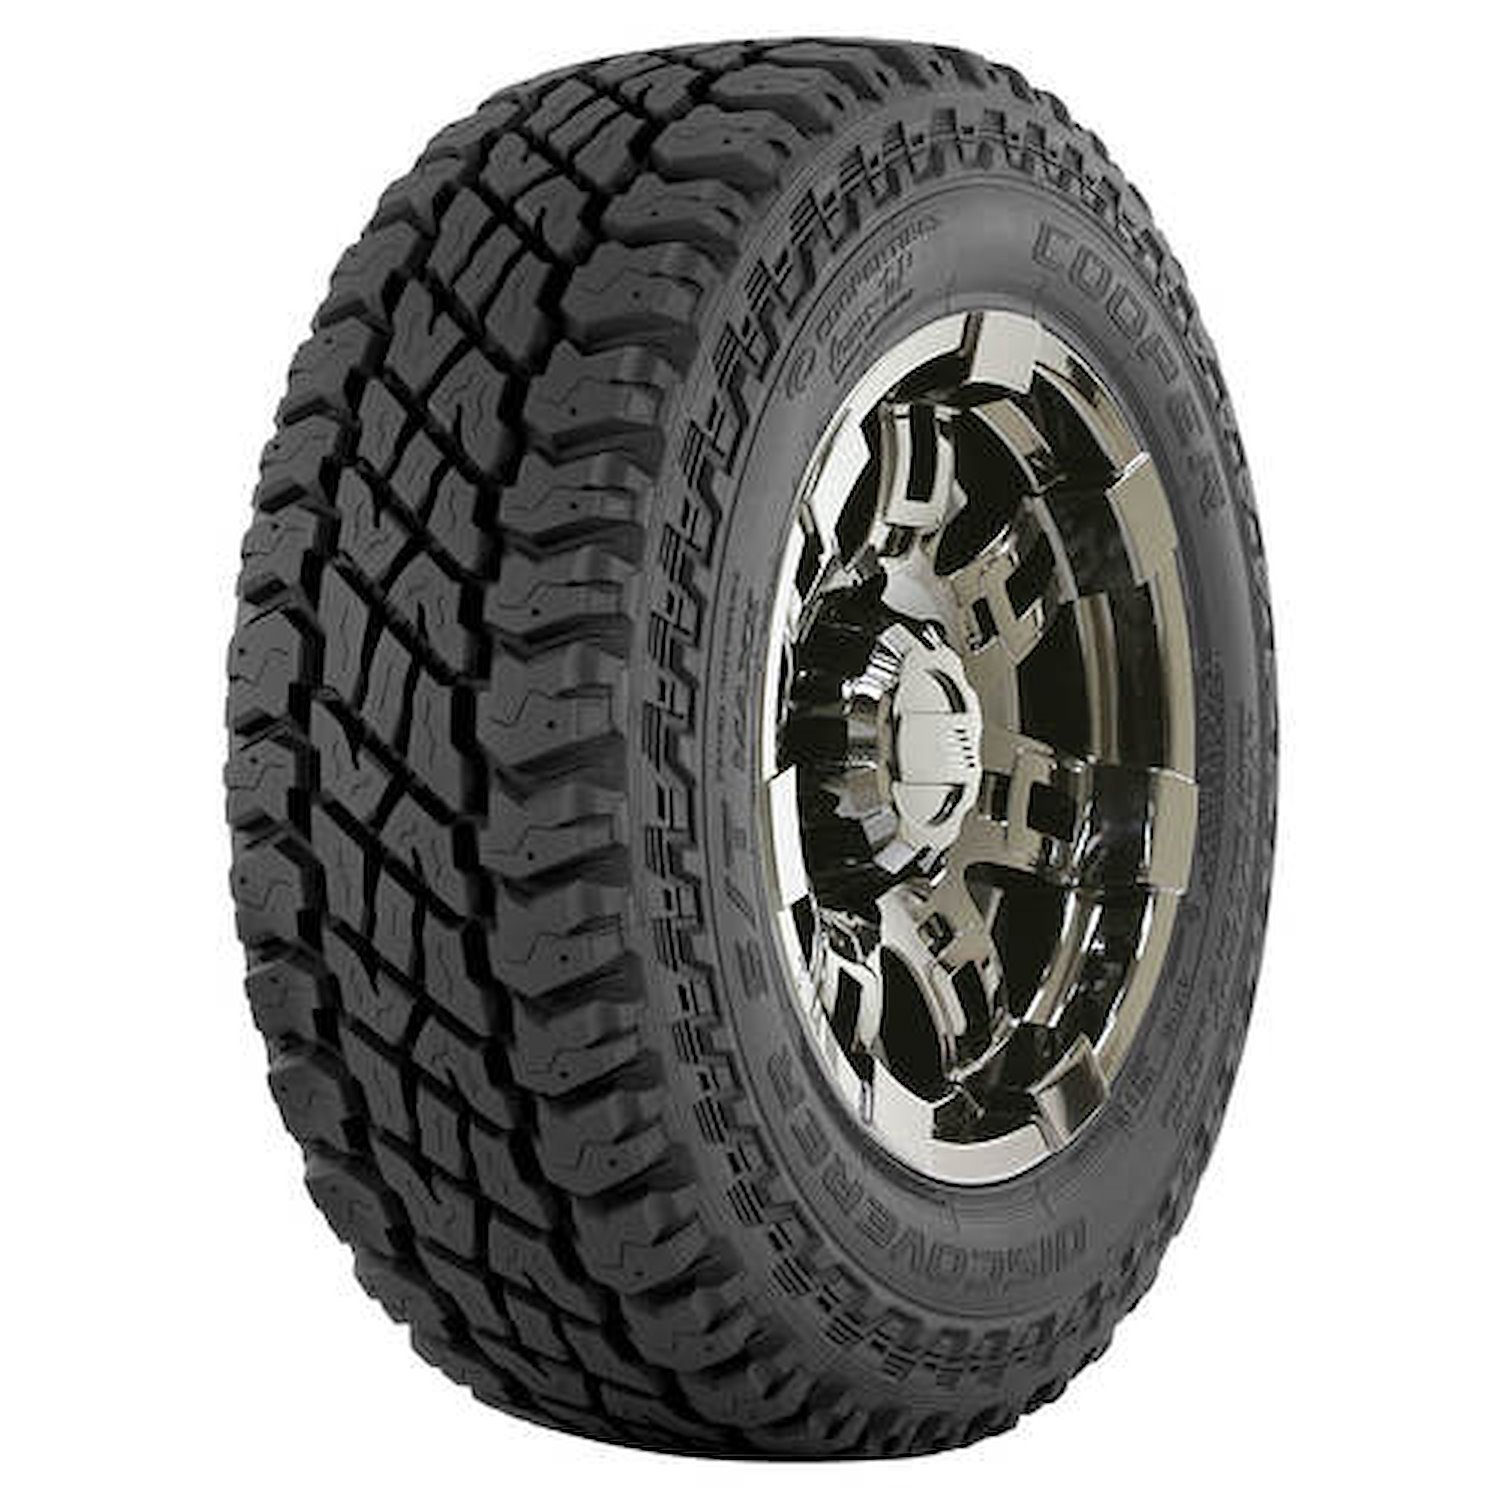 Discoverer S/T Maxx All-Terrain Tire, LT315/75R16